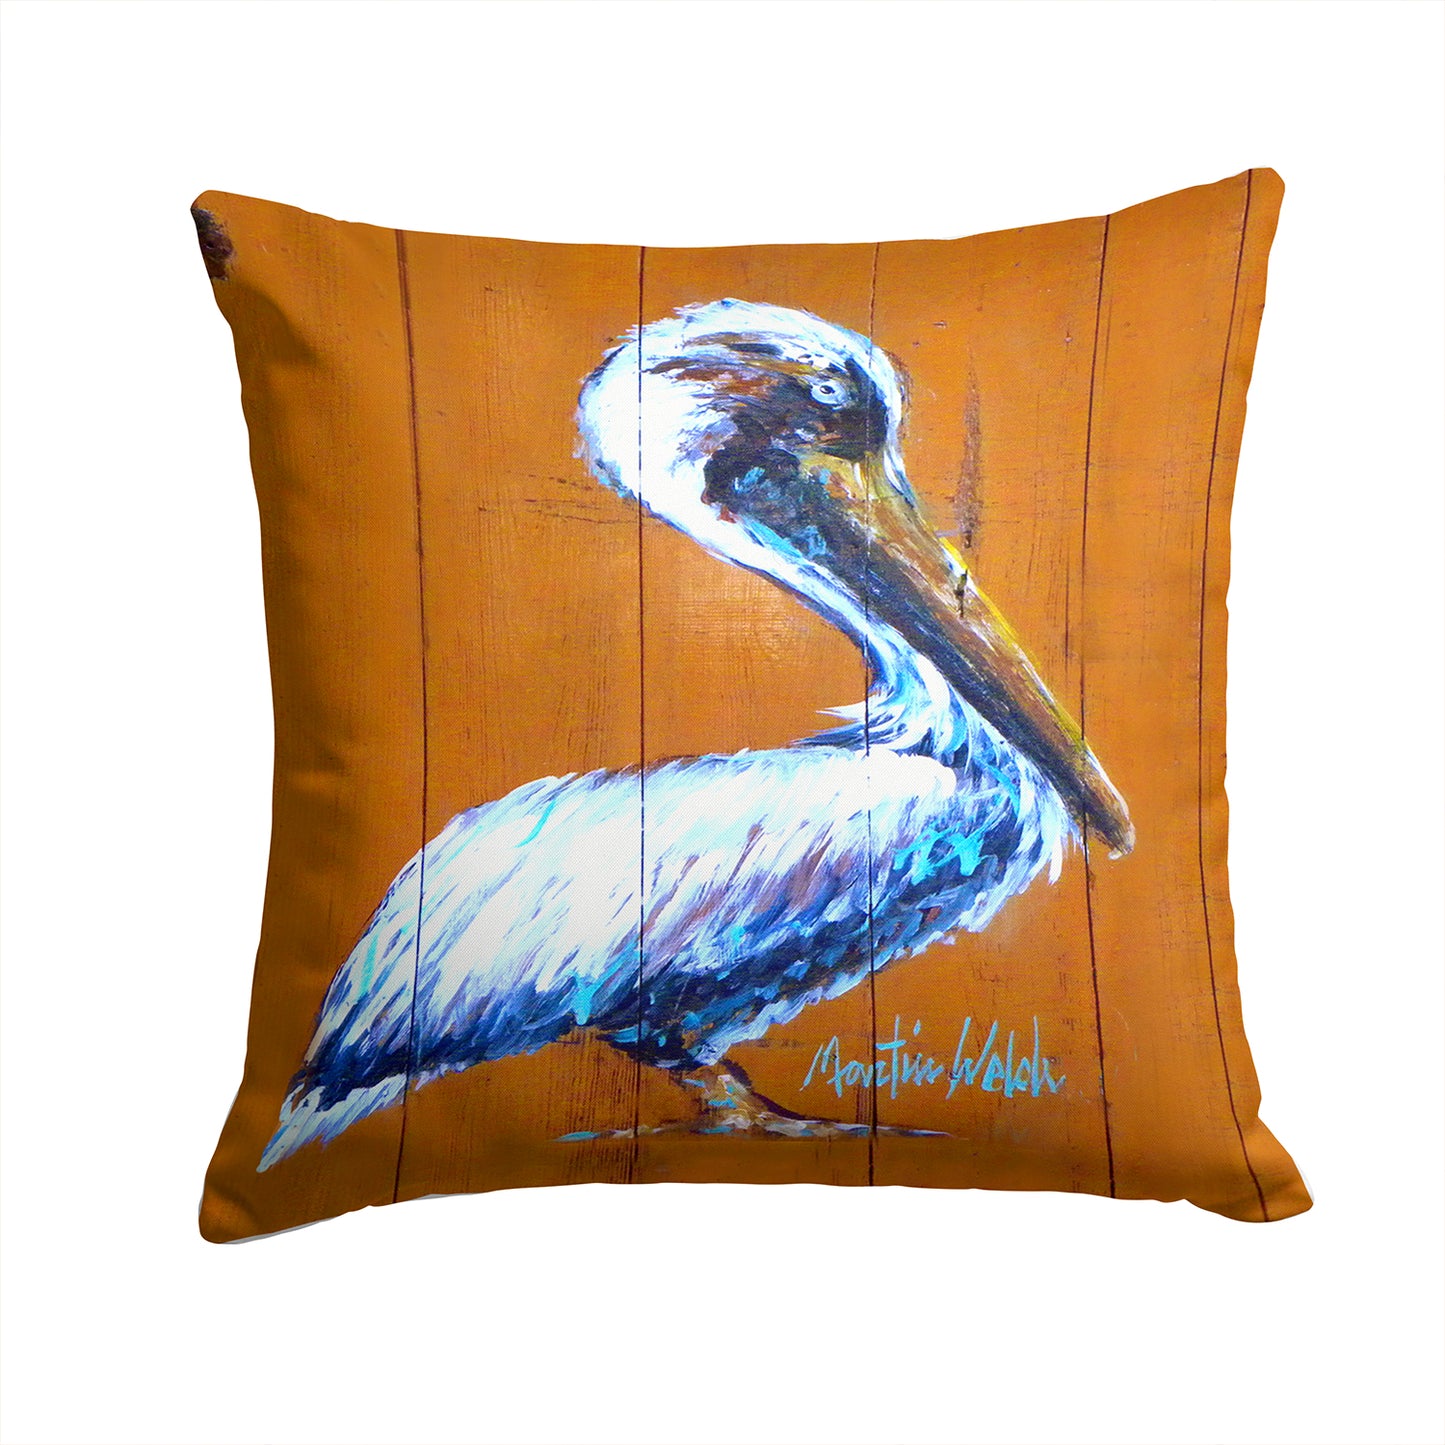 Buy this Pelican Hangin In Fabric Decorative Pillow